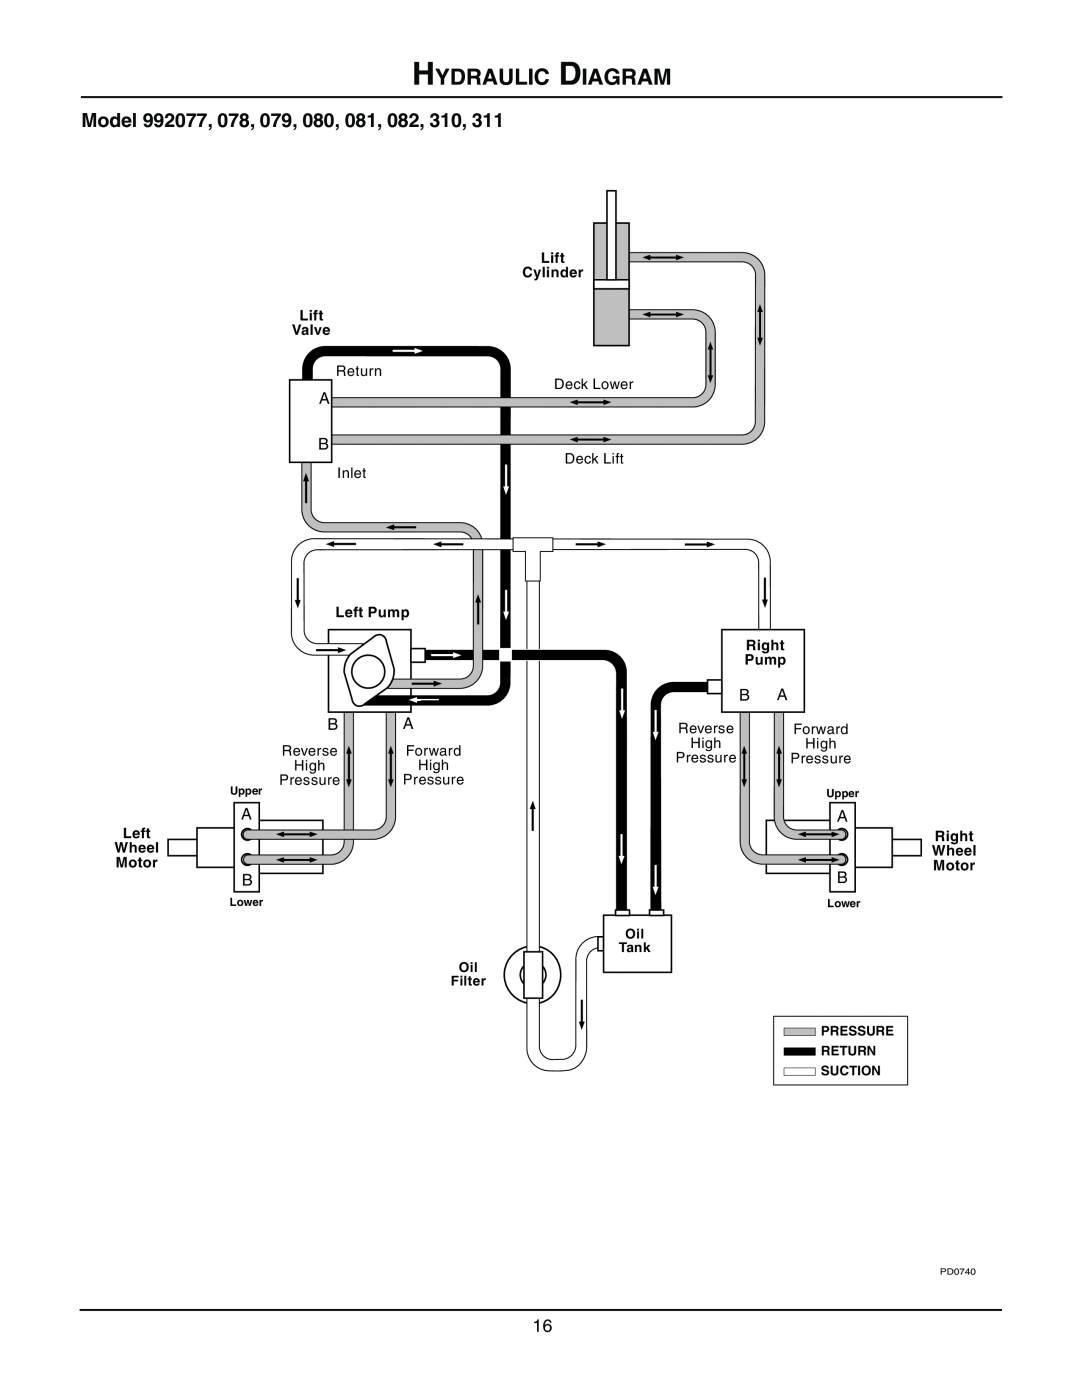 Gravely 992310 19HP-144Z manual Hydraulic Diagram, Model 992077, 078, 079, 080, Lift Cylinder Lift Valve, Left Wheel Motor 